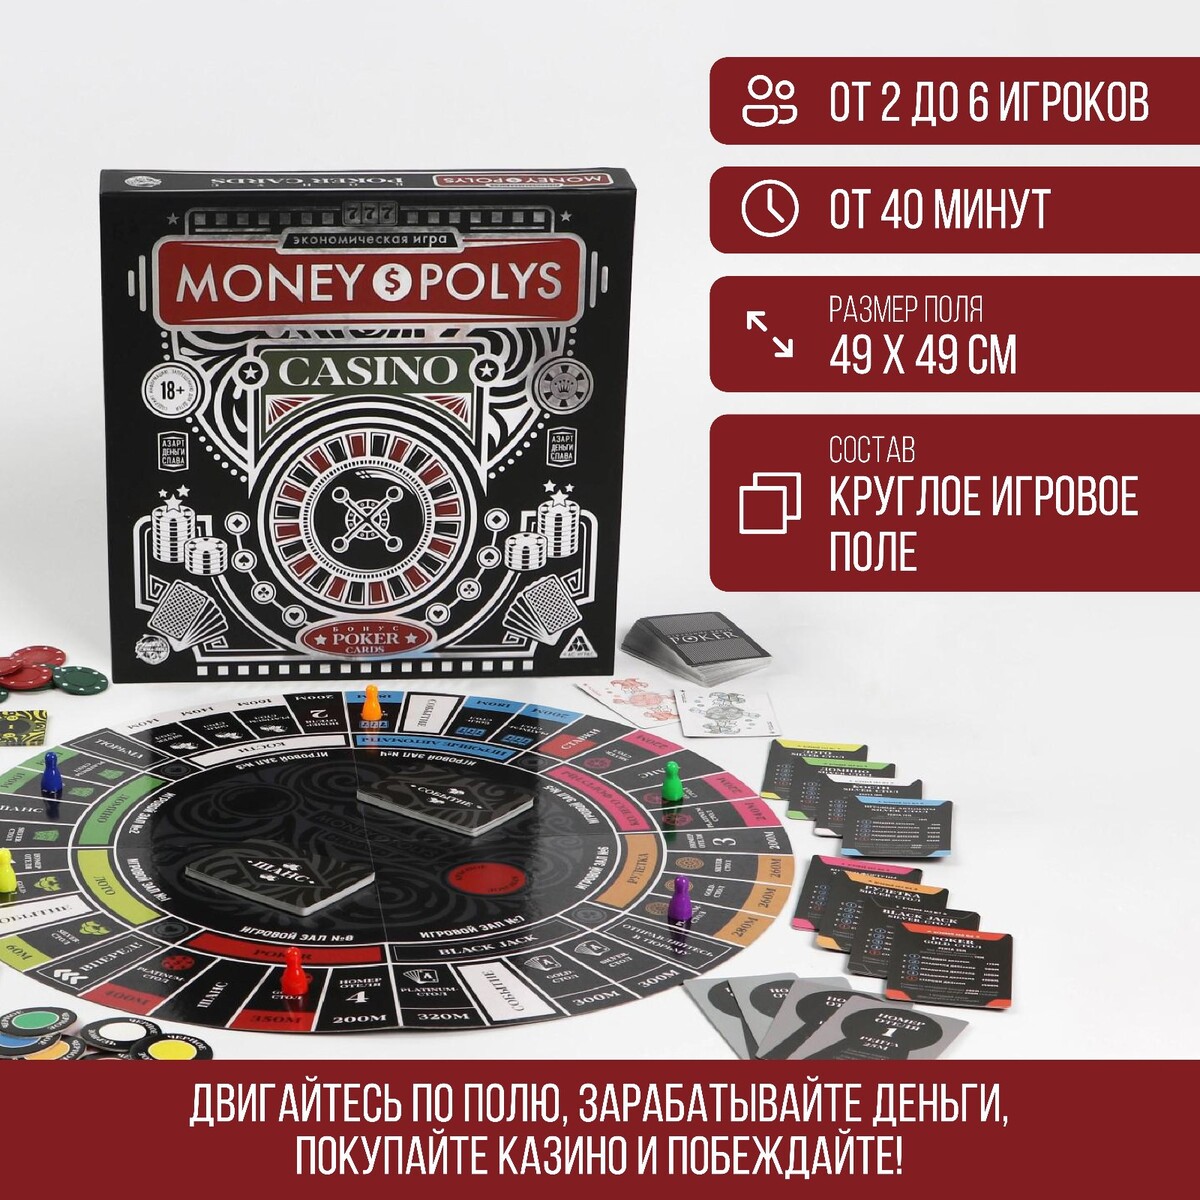 Game money отзывы